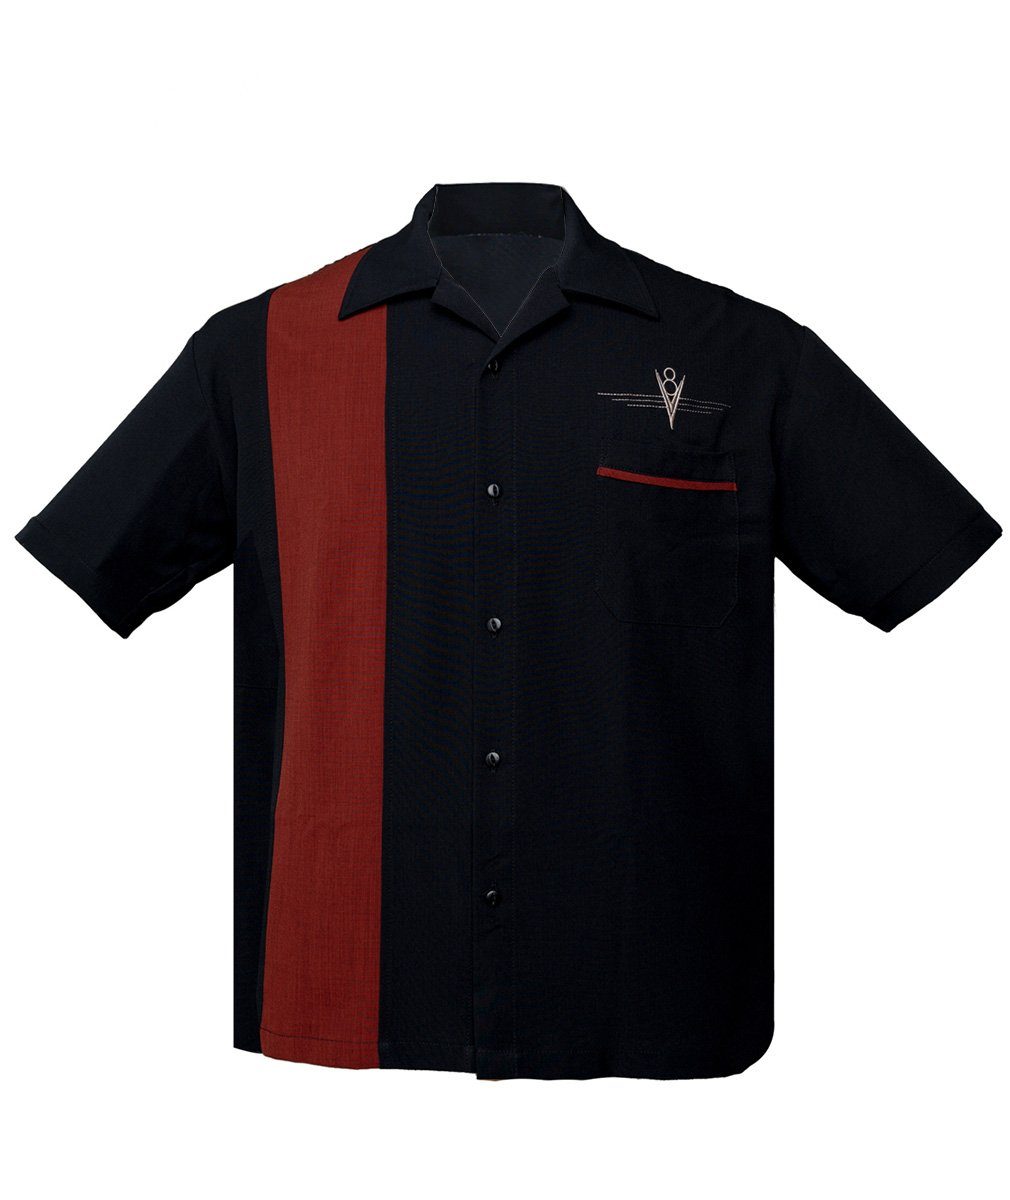 Steady Clothing Kurzarmhemd V8 Classic Schwarz Retro Vintage Bowling Shirt Rockabilly